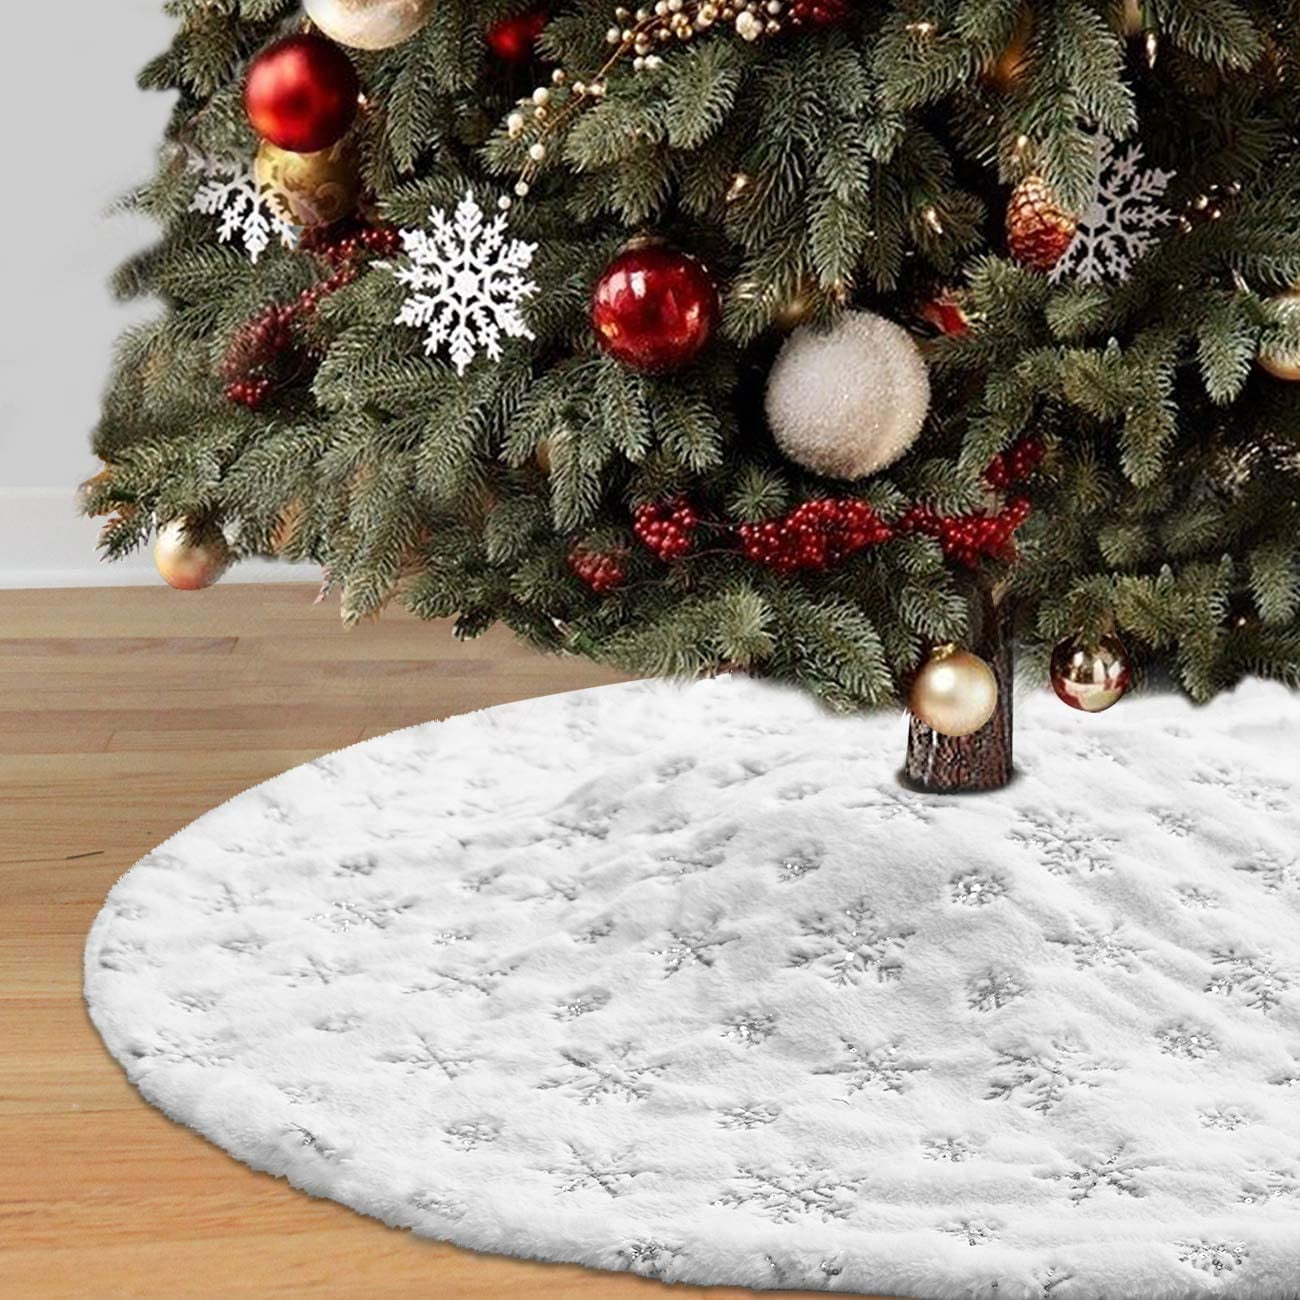 White Christmas Tree Skirt 48 inches Large Faux Fur Xmas Tree Skirt with Shining Snowflake Christmas Party Ornaments Holiday Decor - Walmart.com